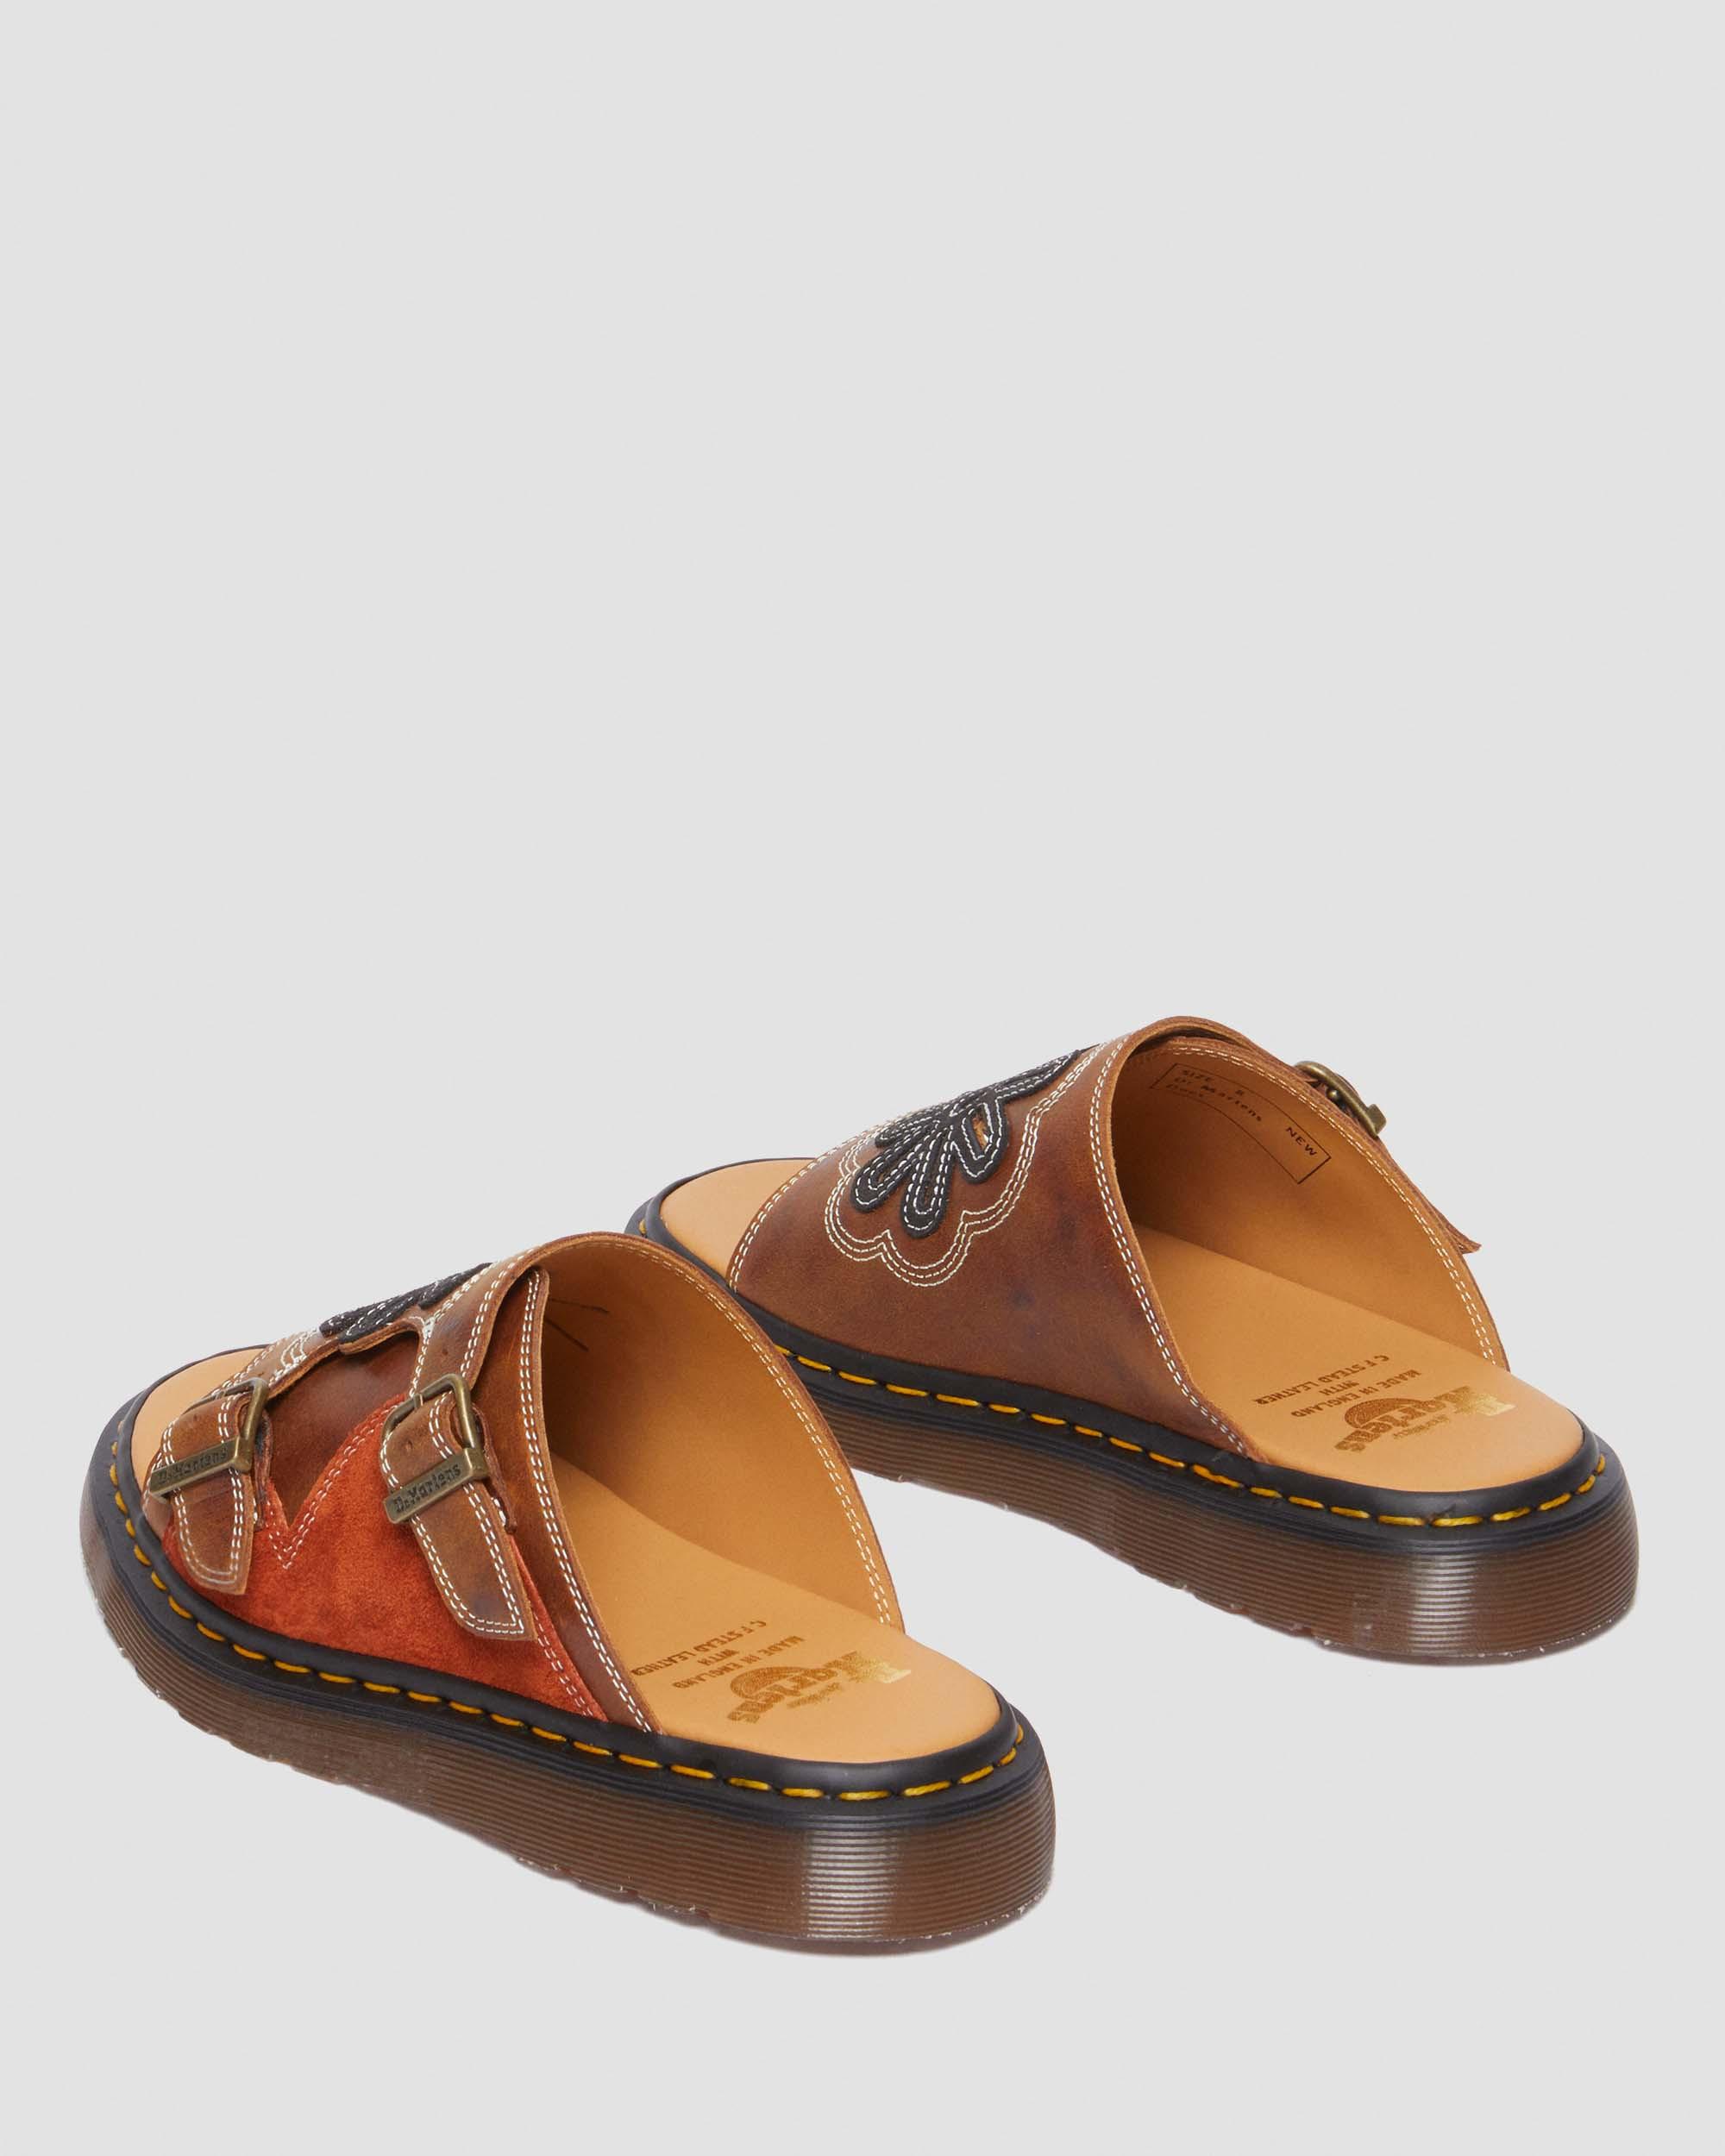 Dayne Made in England Leren & Suède Applique Slipper Sandalen in Conker Brown+Black+Rust Orange